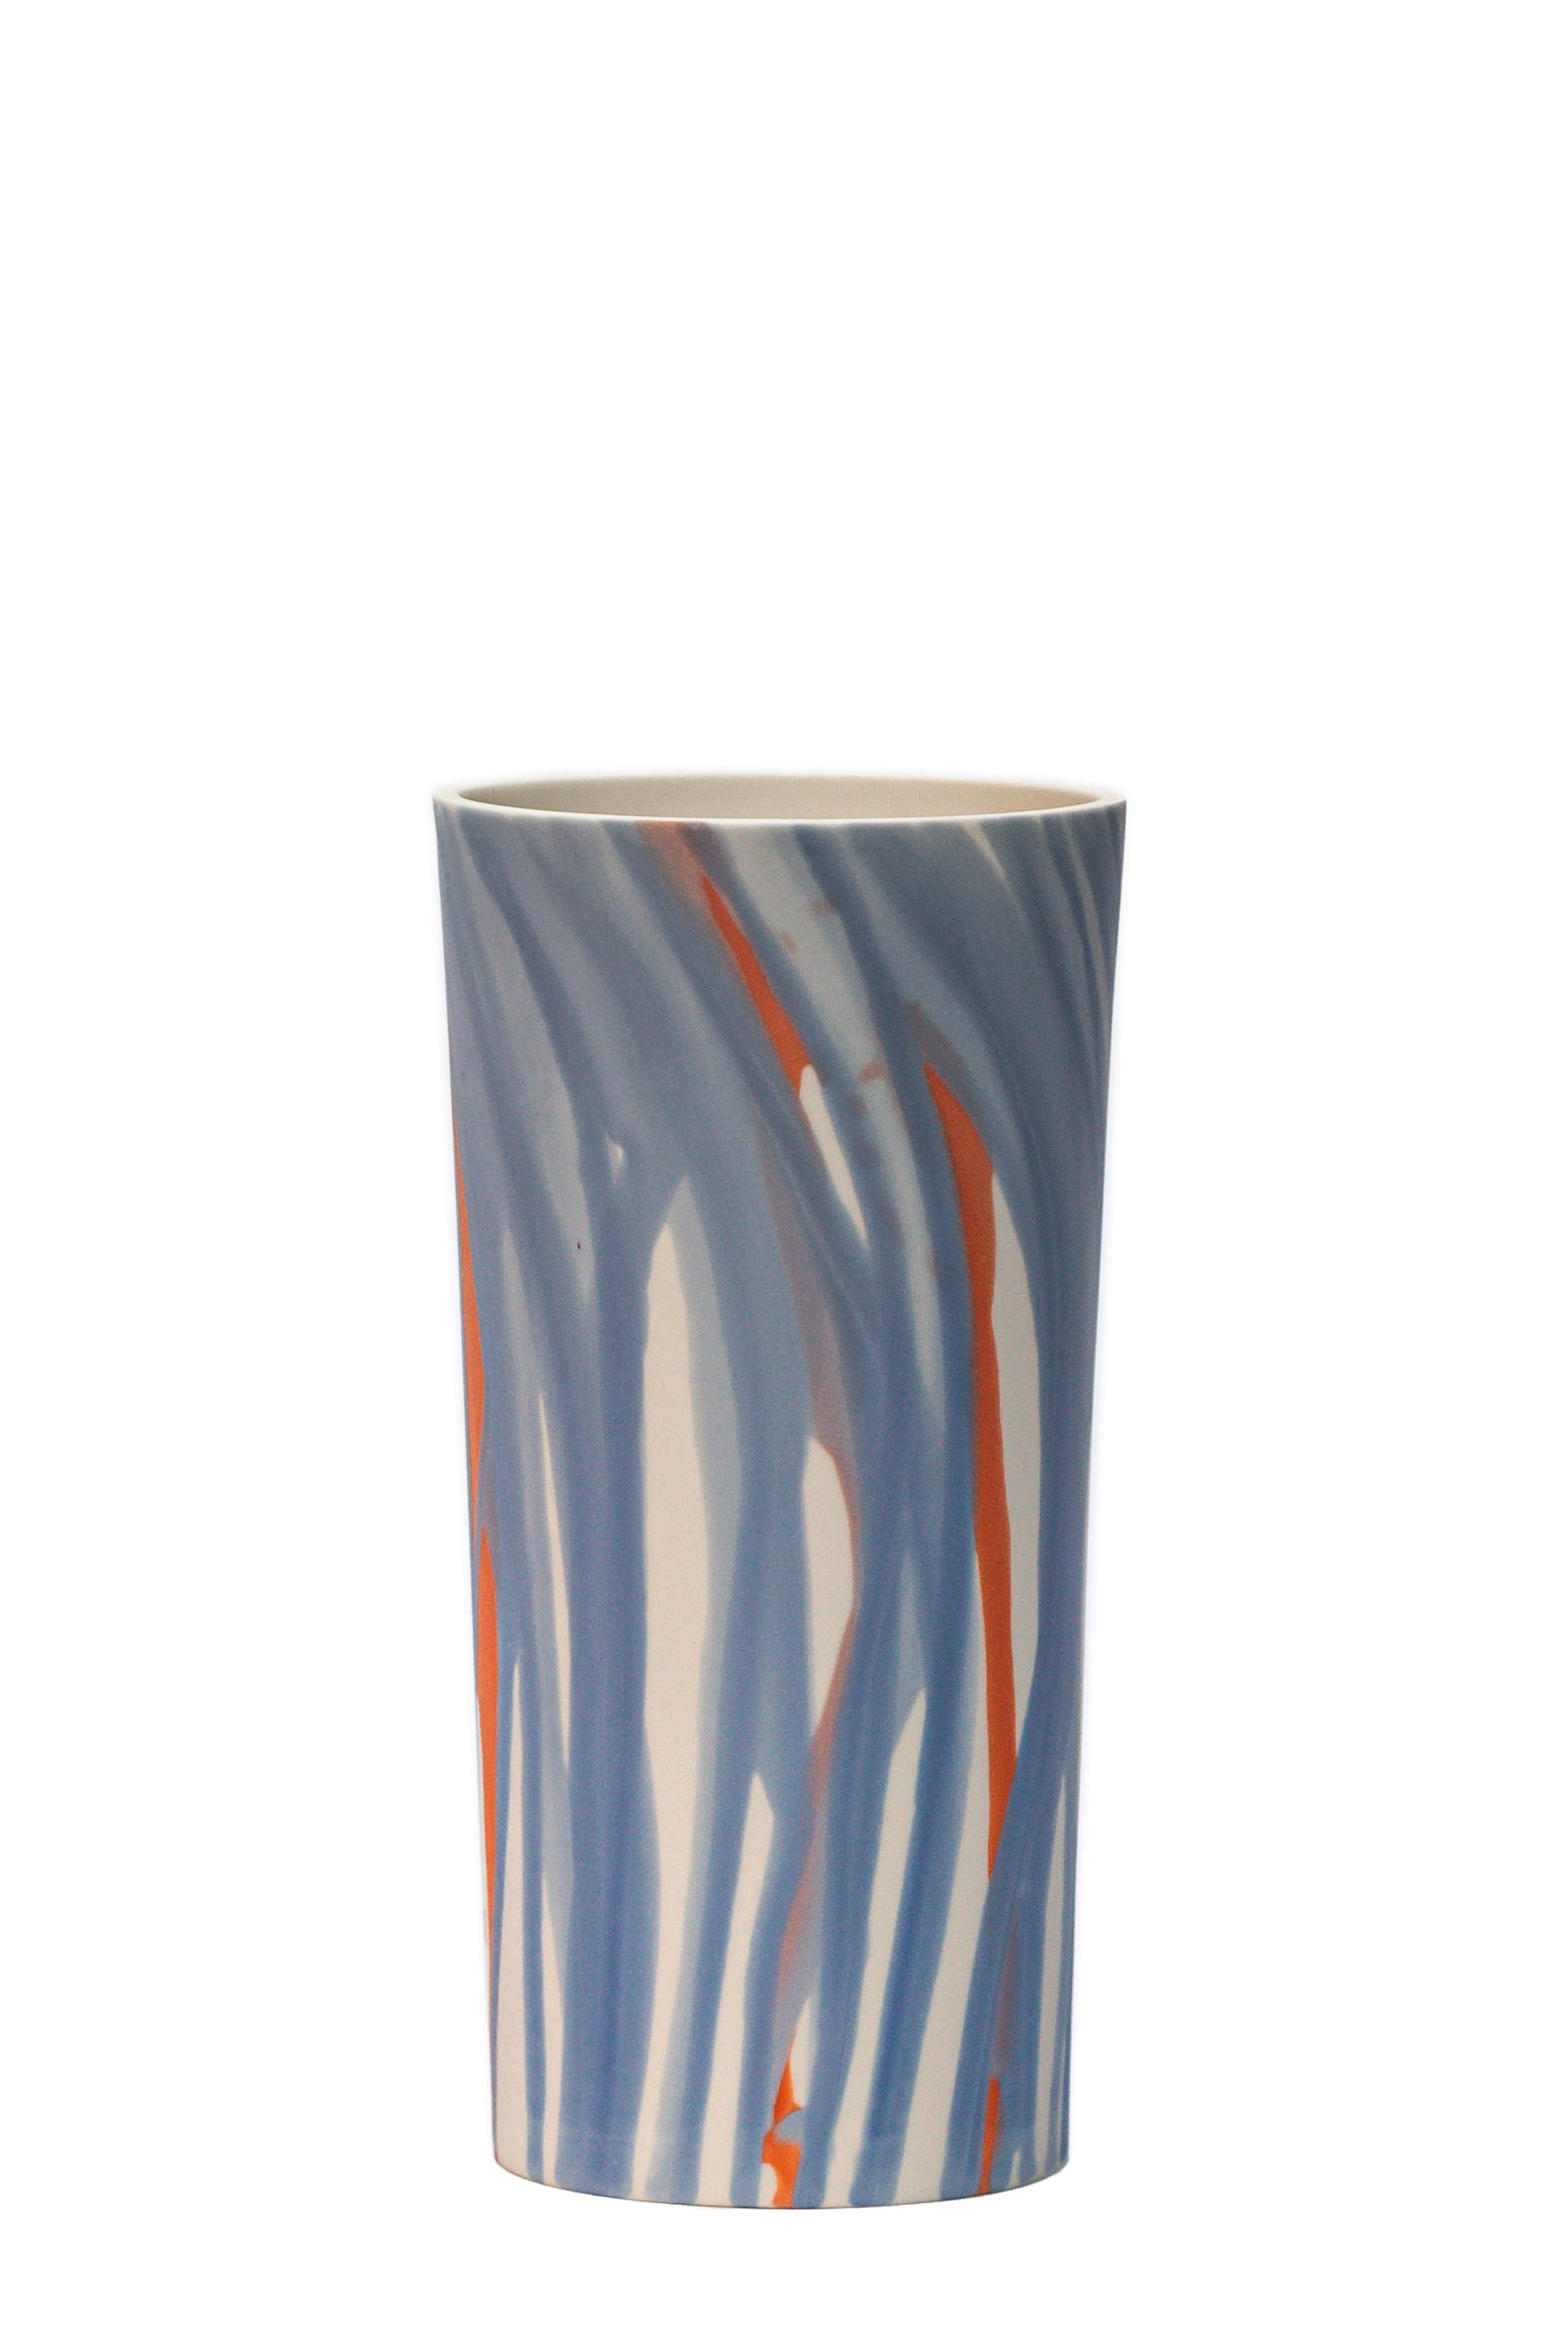 Hand-Painted Salmon and Sky Porcelain Vase Unique Parianware Contemporary 21st Century UK